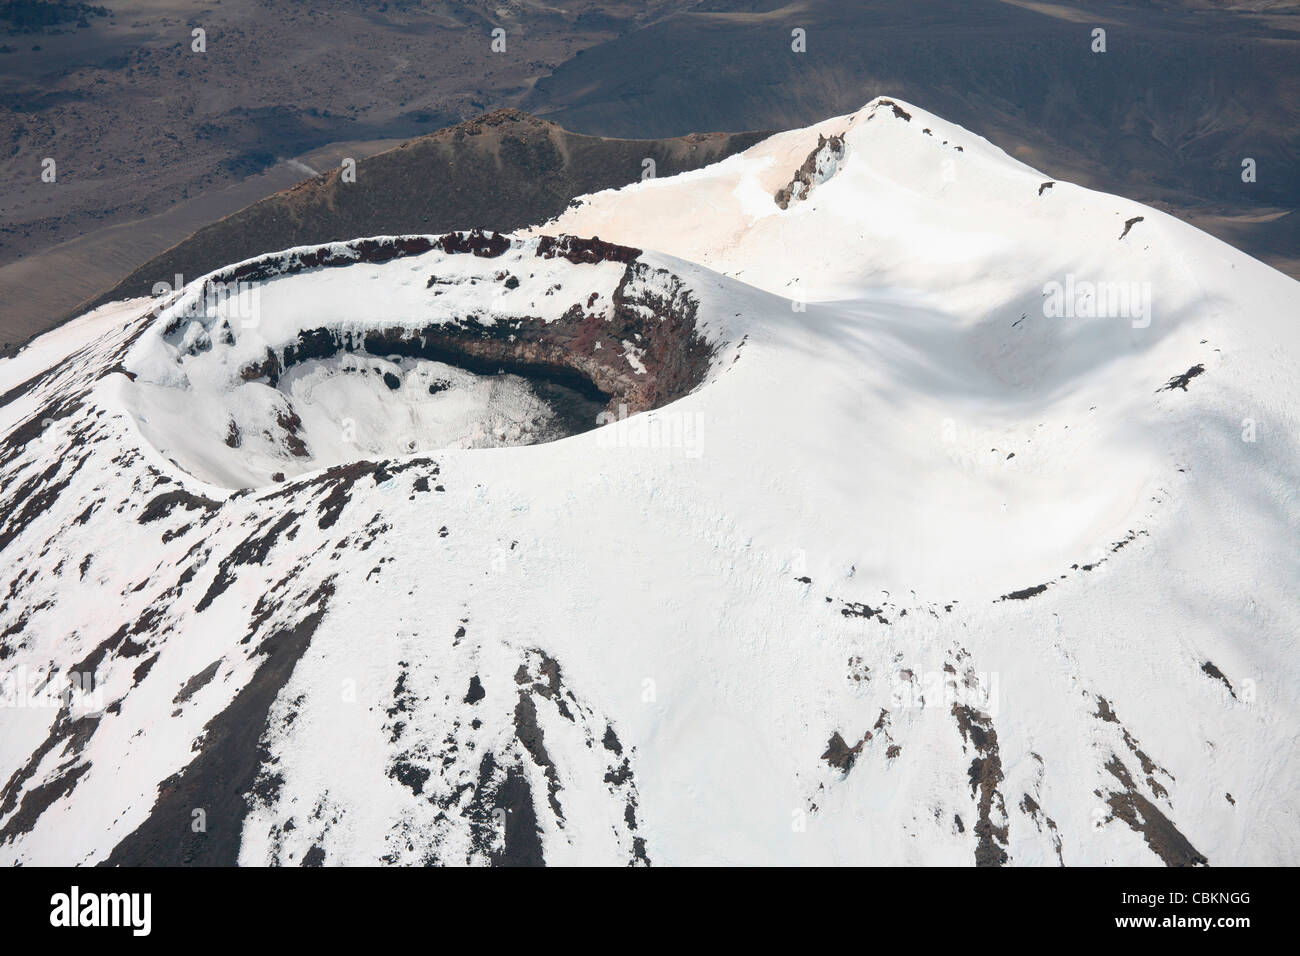 November 2007 - Snow-covered Ngauruhoe cone, Mount Tongariro volcano, New Zealand. Stock Photo